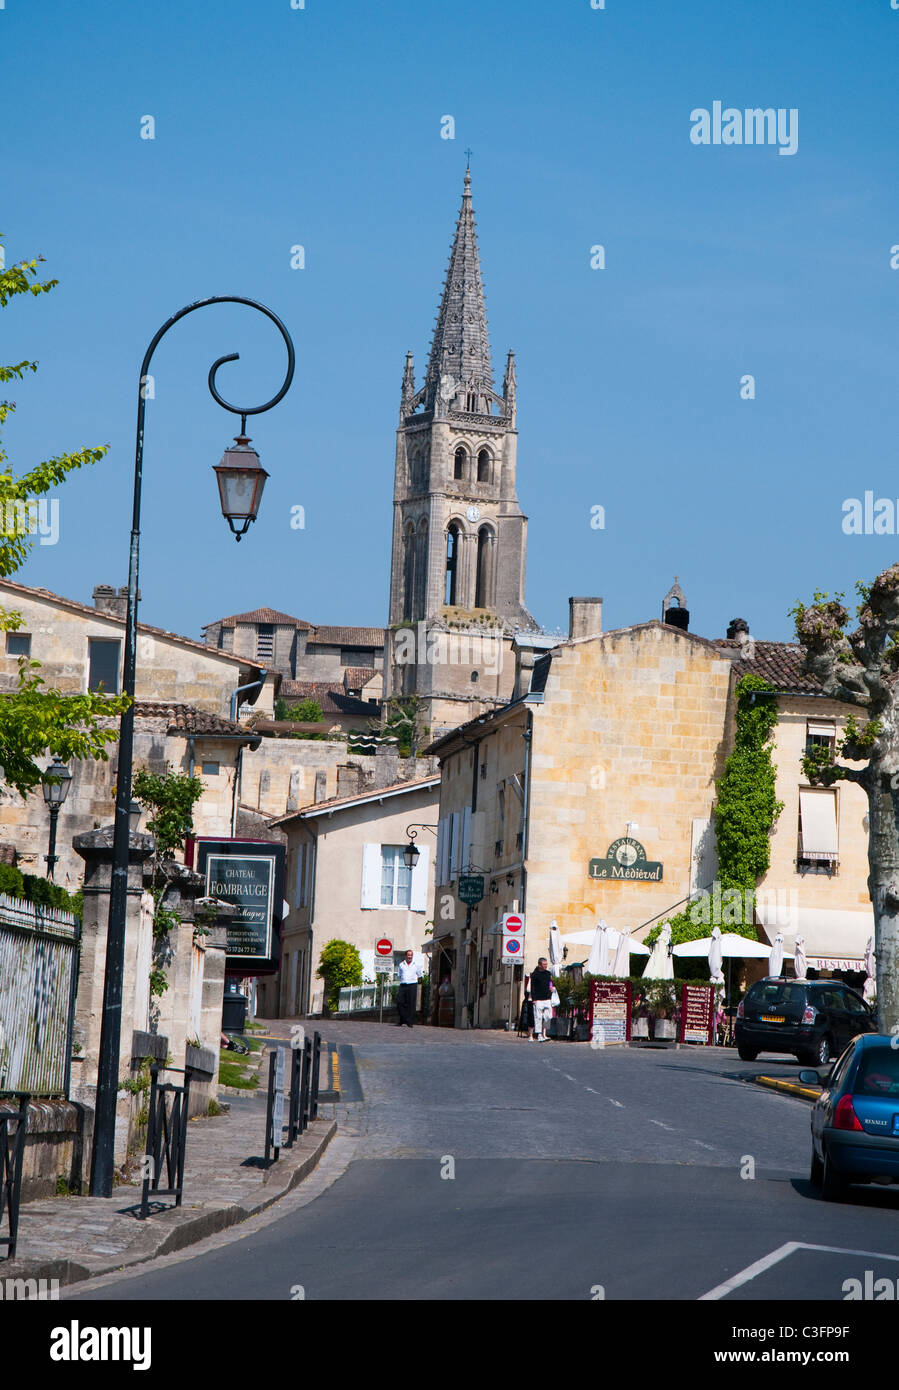 The picturesque town of Saint Emilion, Gironde Aquitaine South West France EU Stock Photo